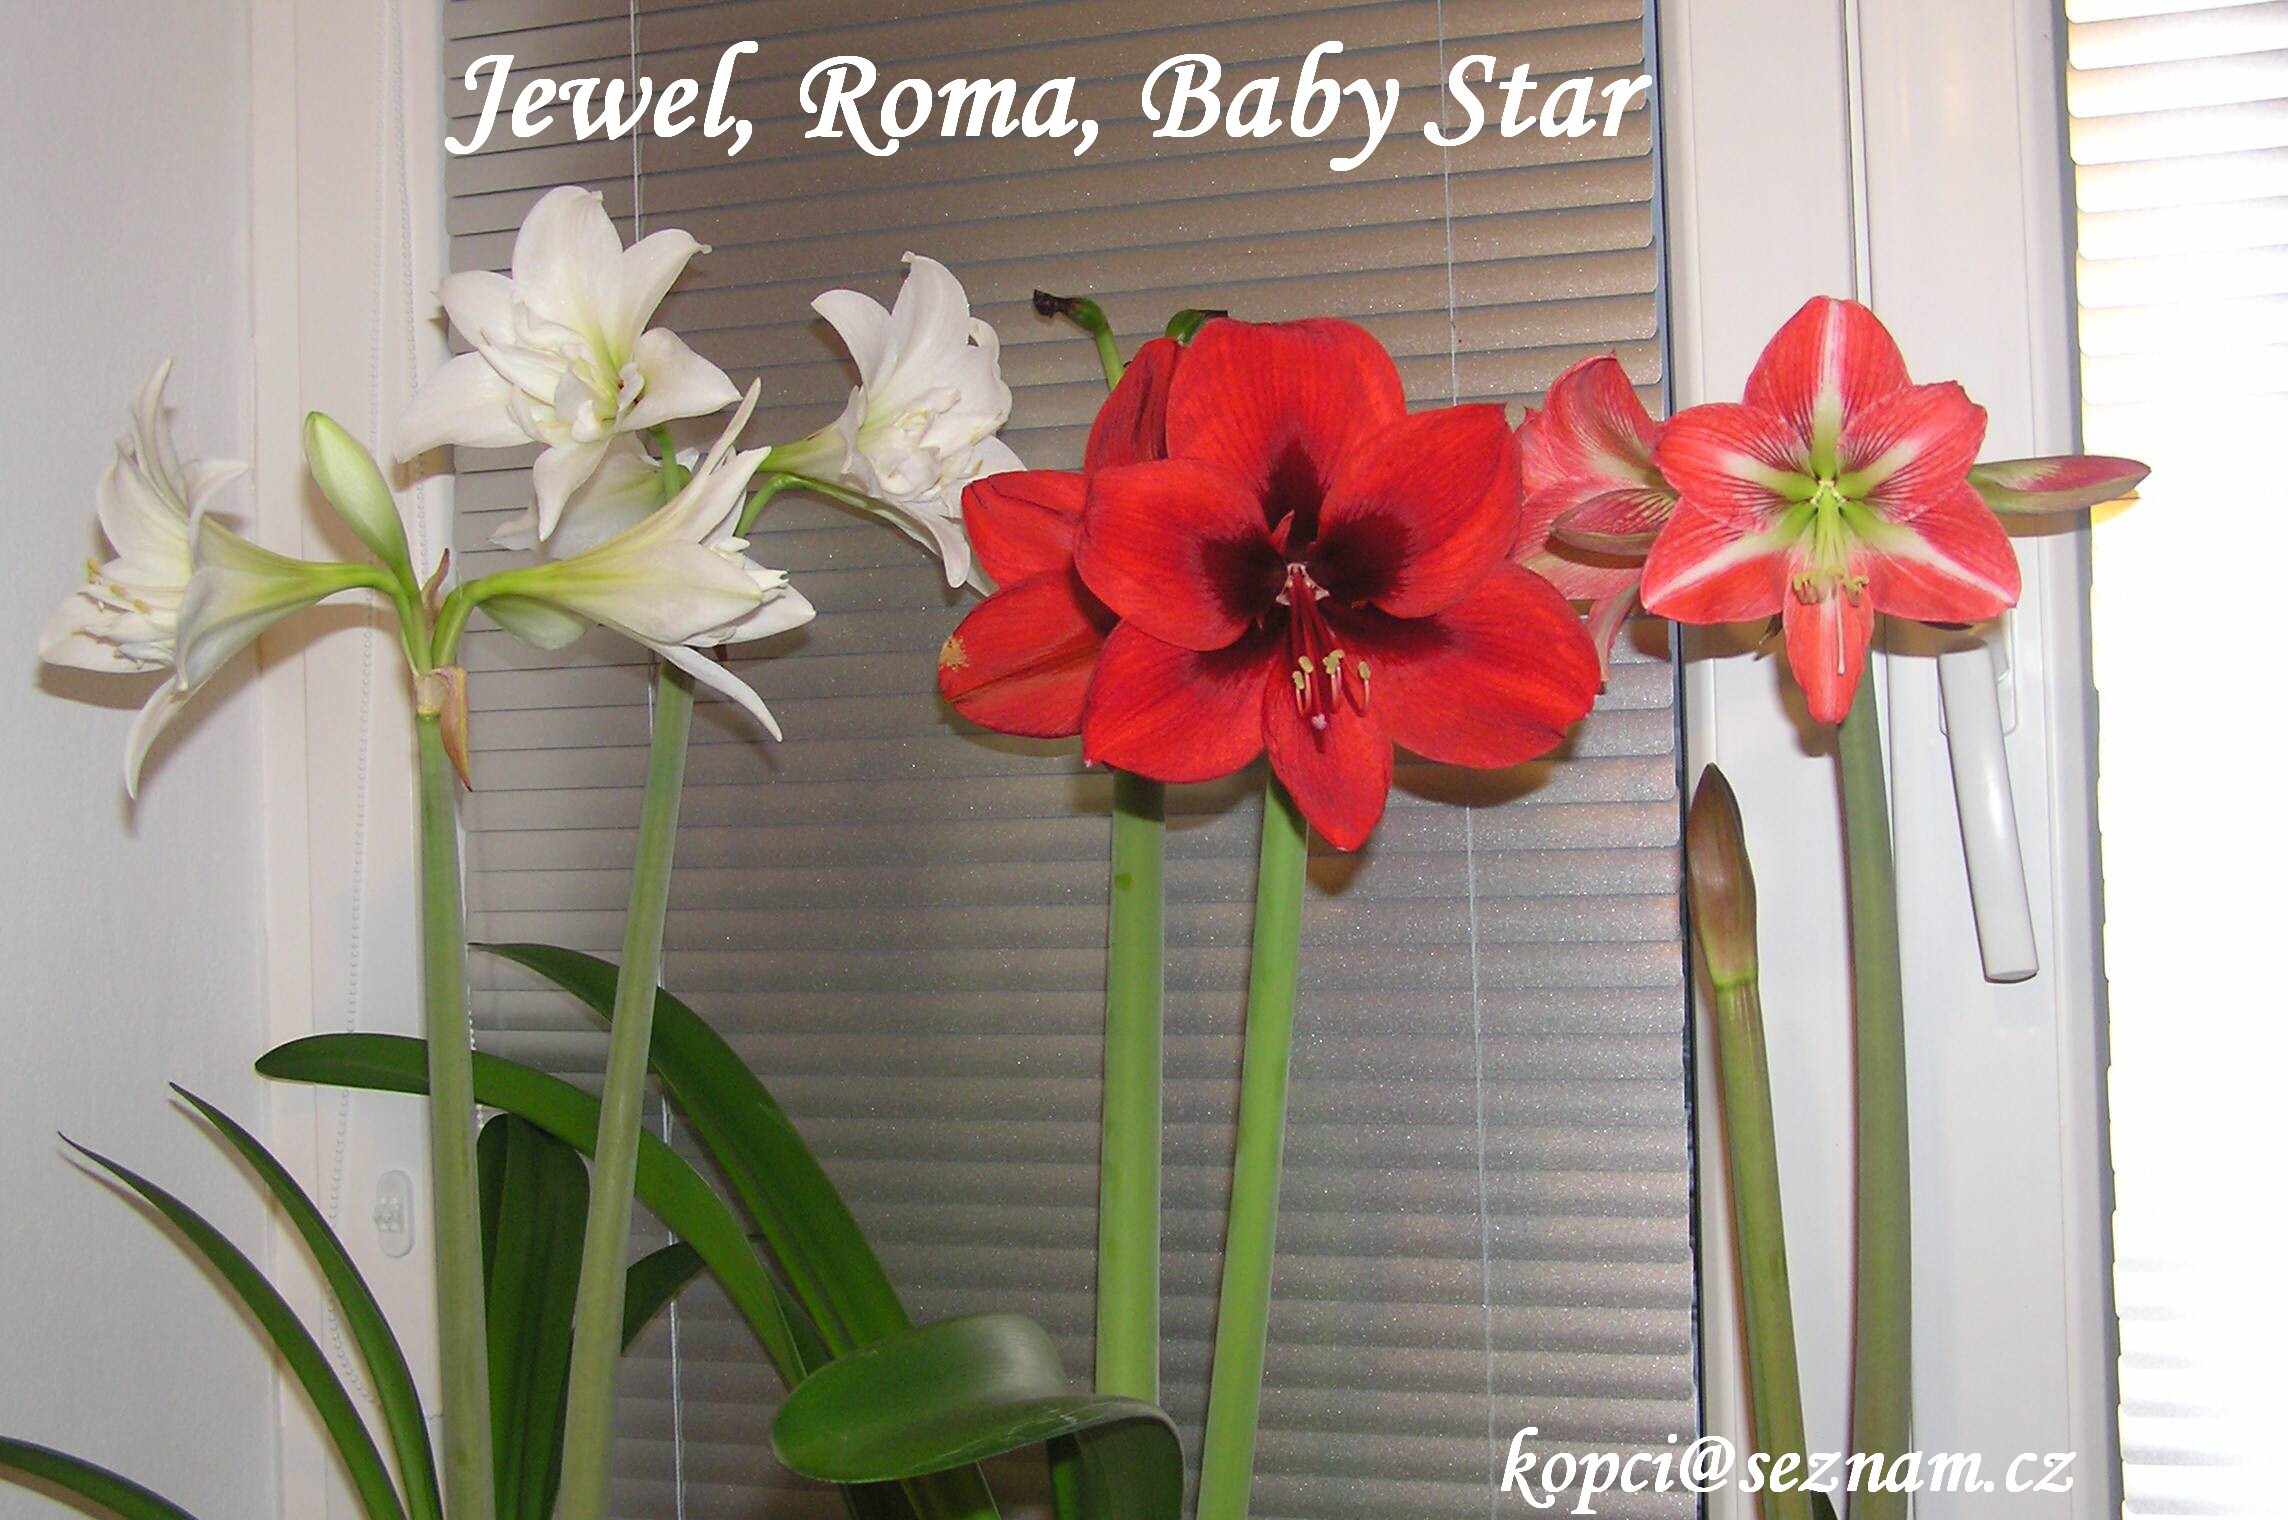 Jewel, Roma, Baby Star.jpg